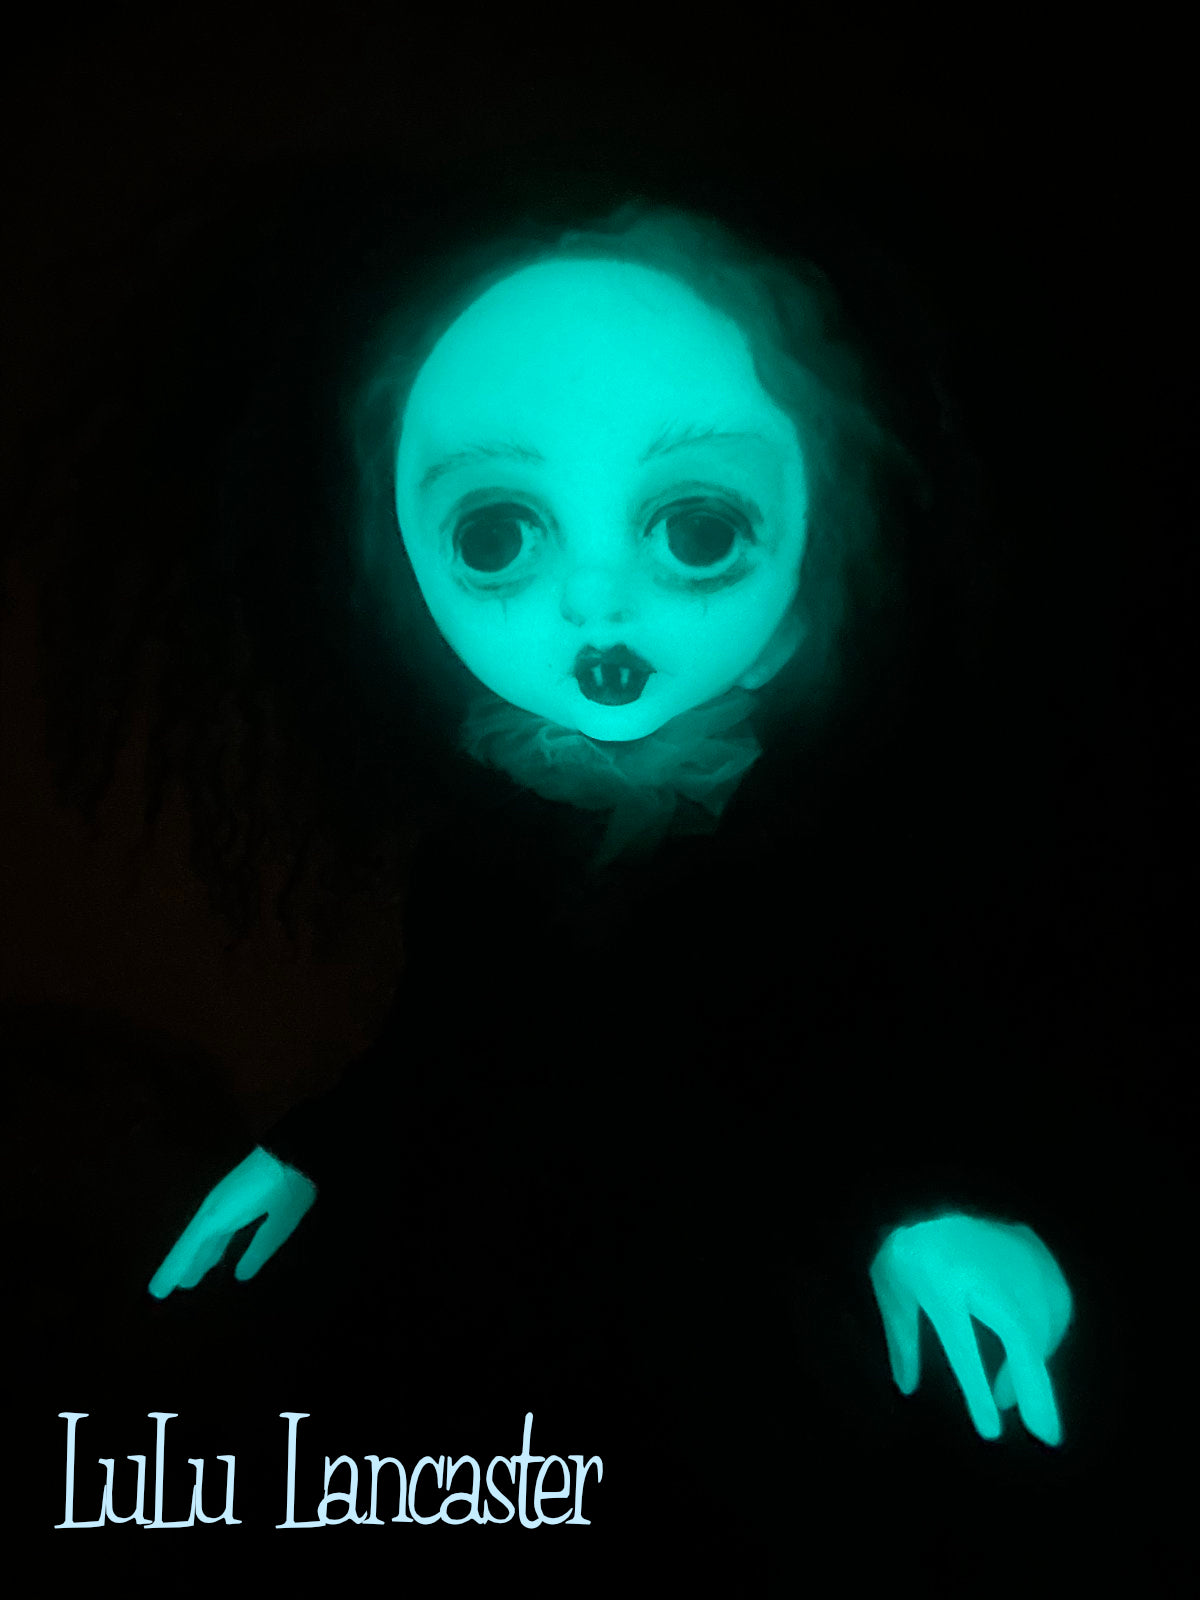 Arliss The glowie Vampire Original LuLu Lancaster Art Doll